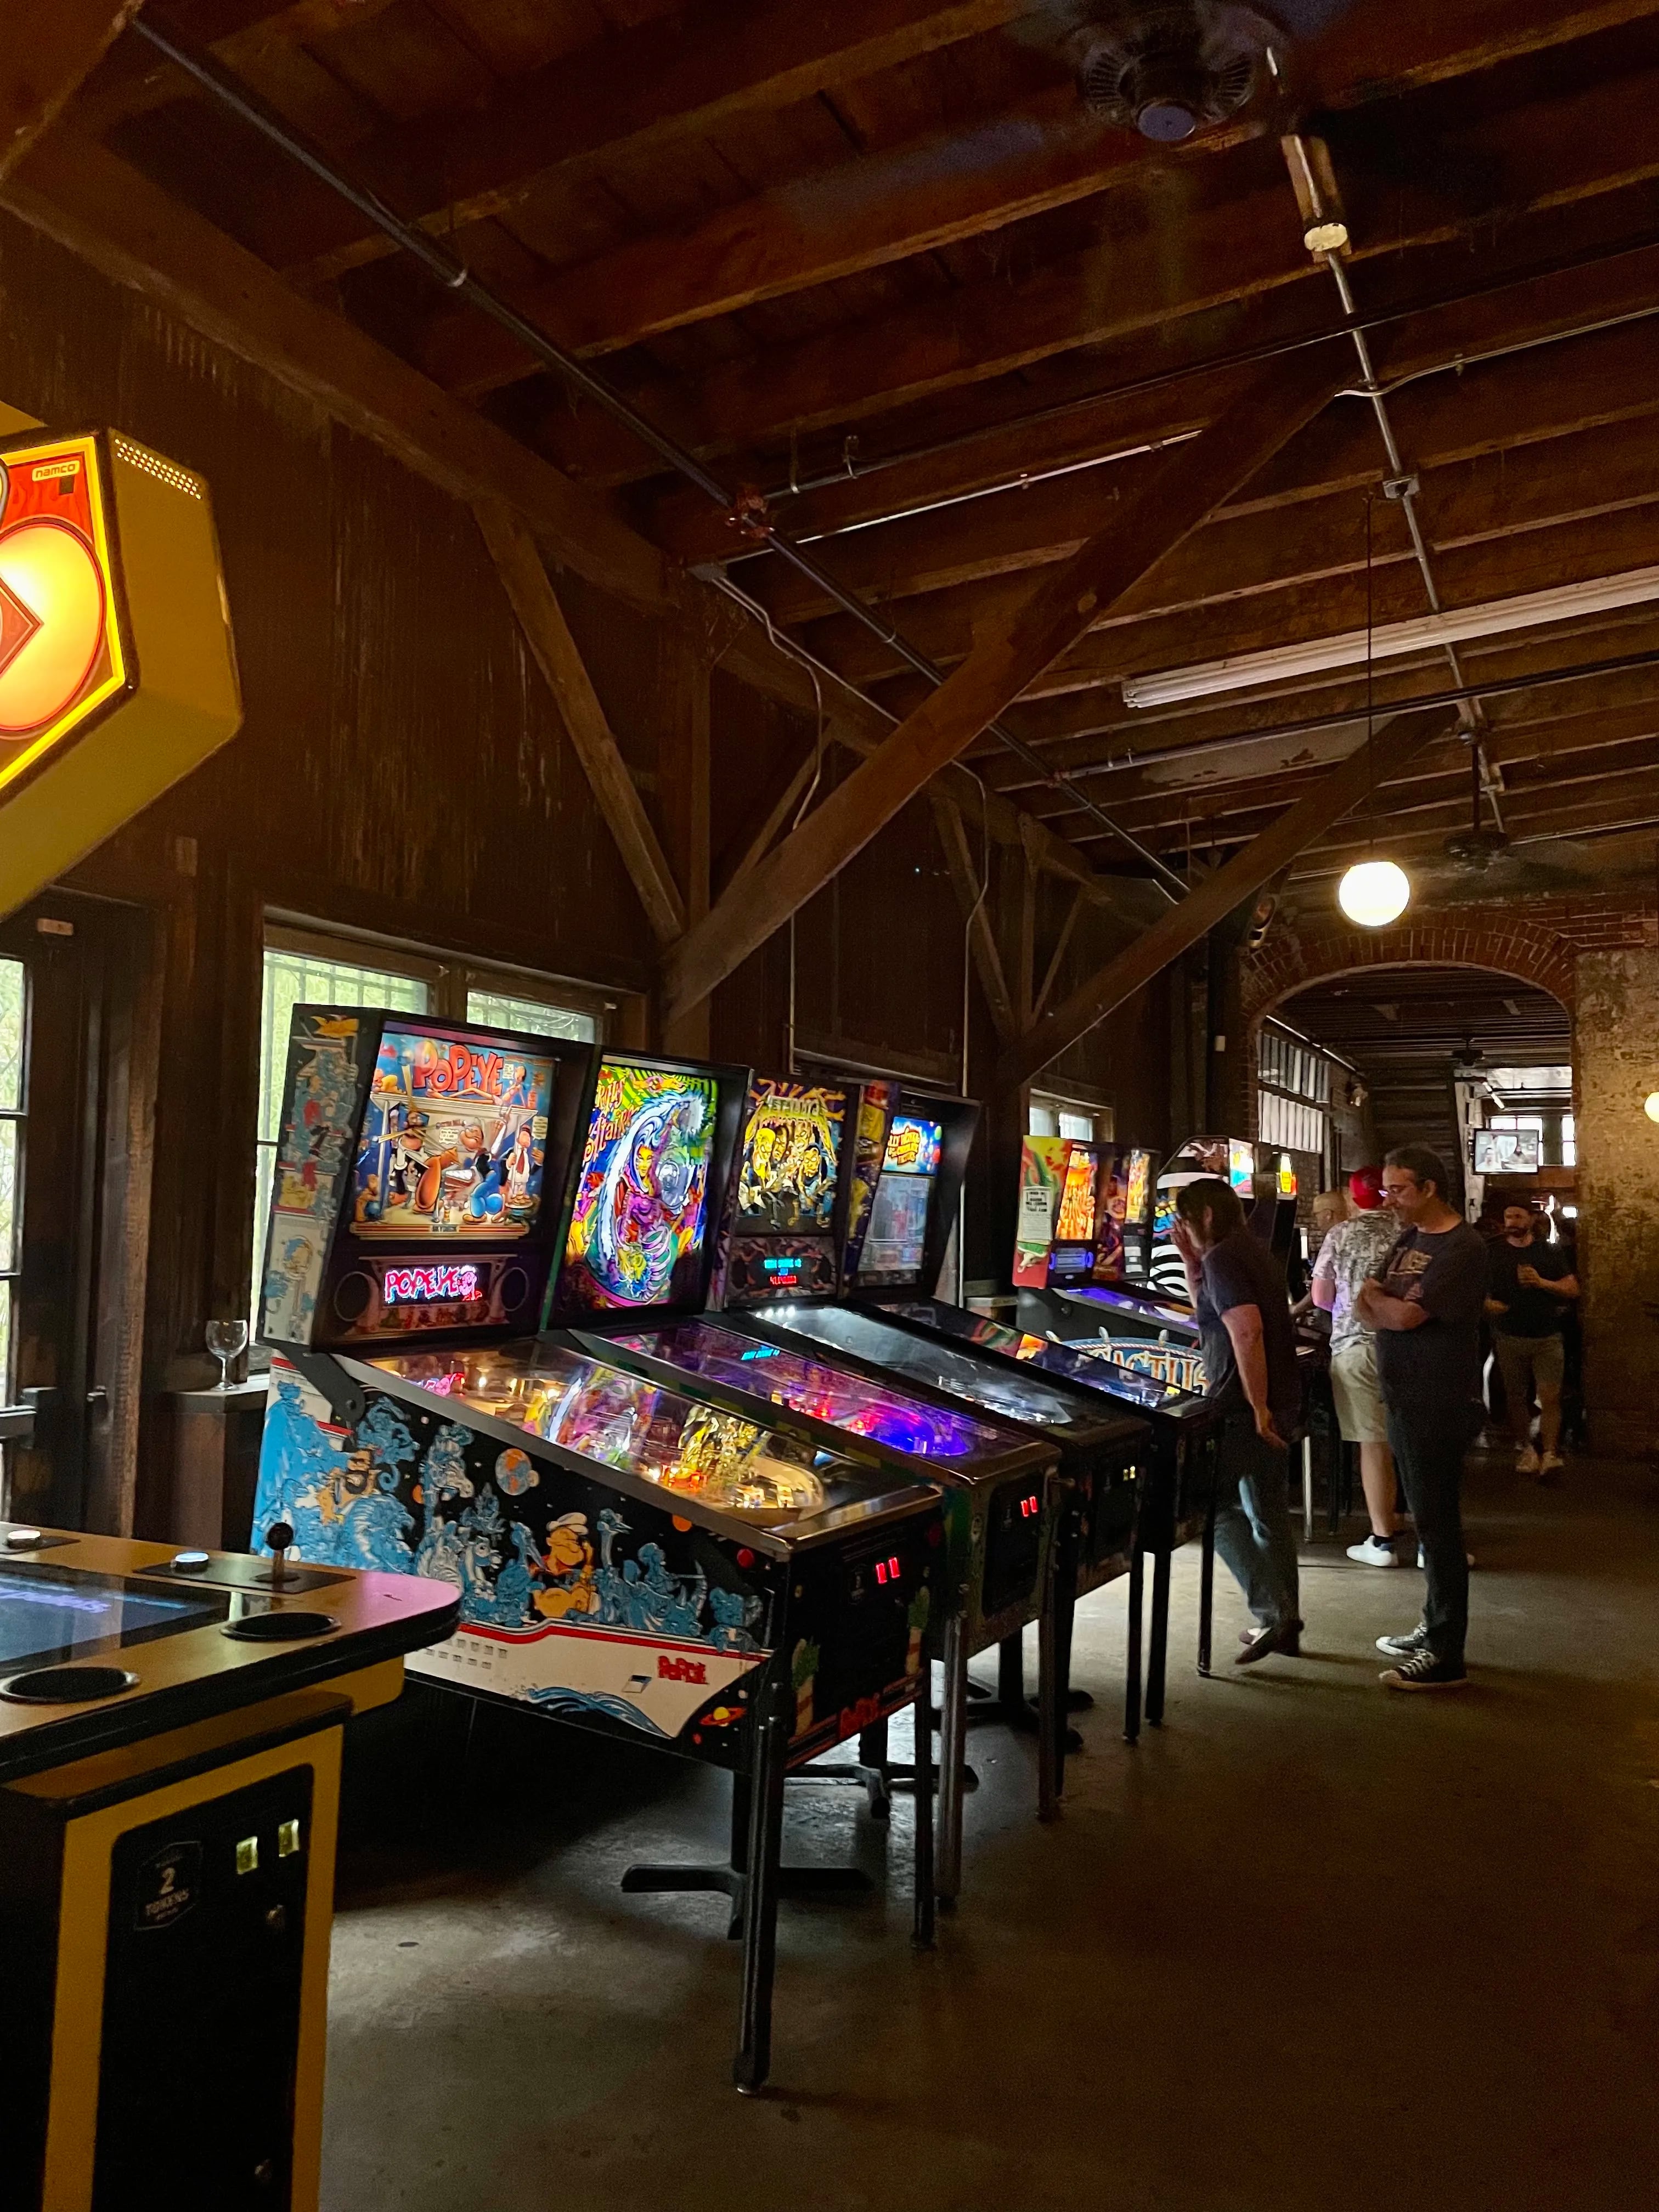 Play arcade games at this Fishtown bar.